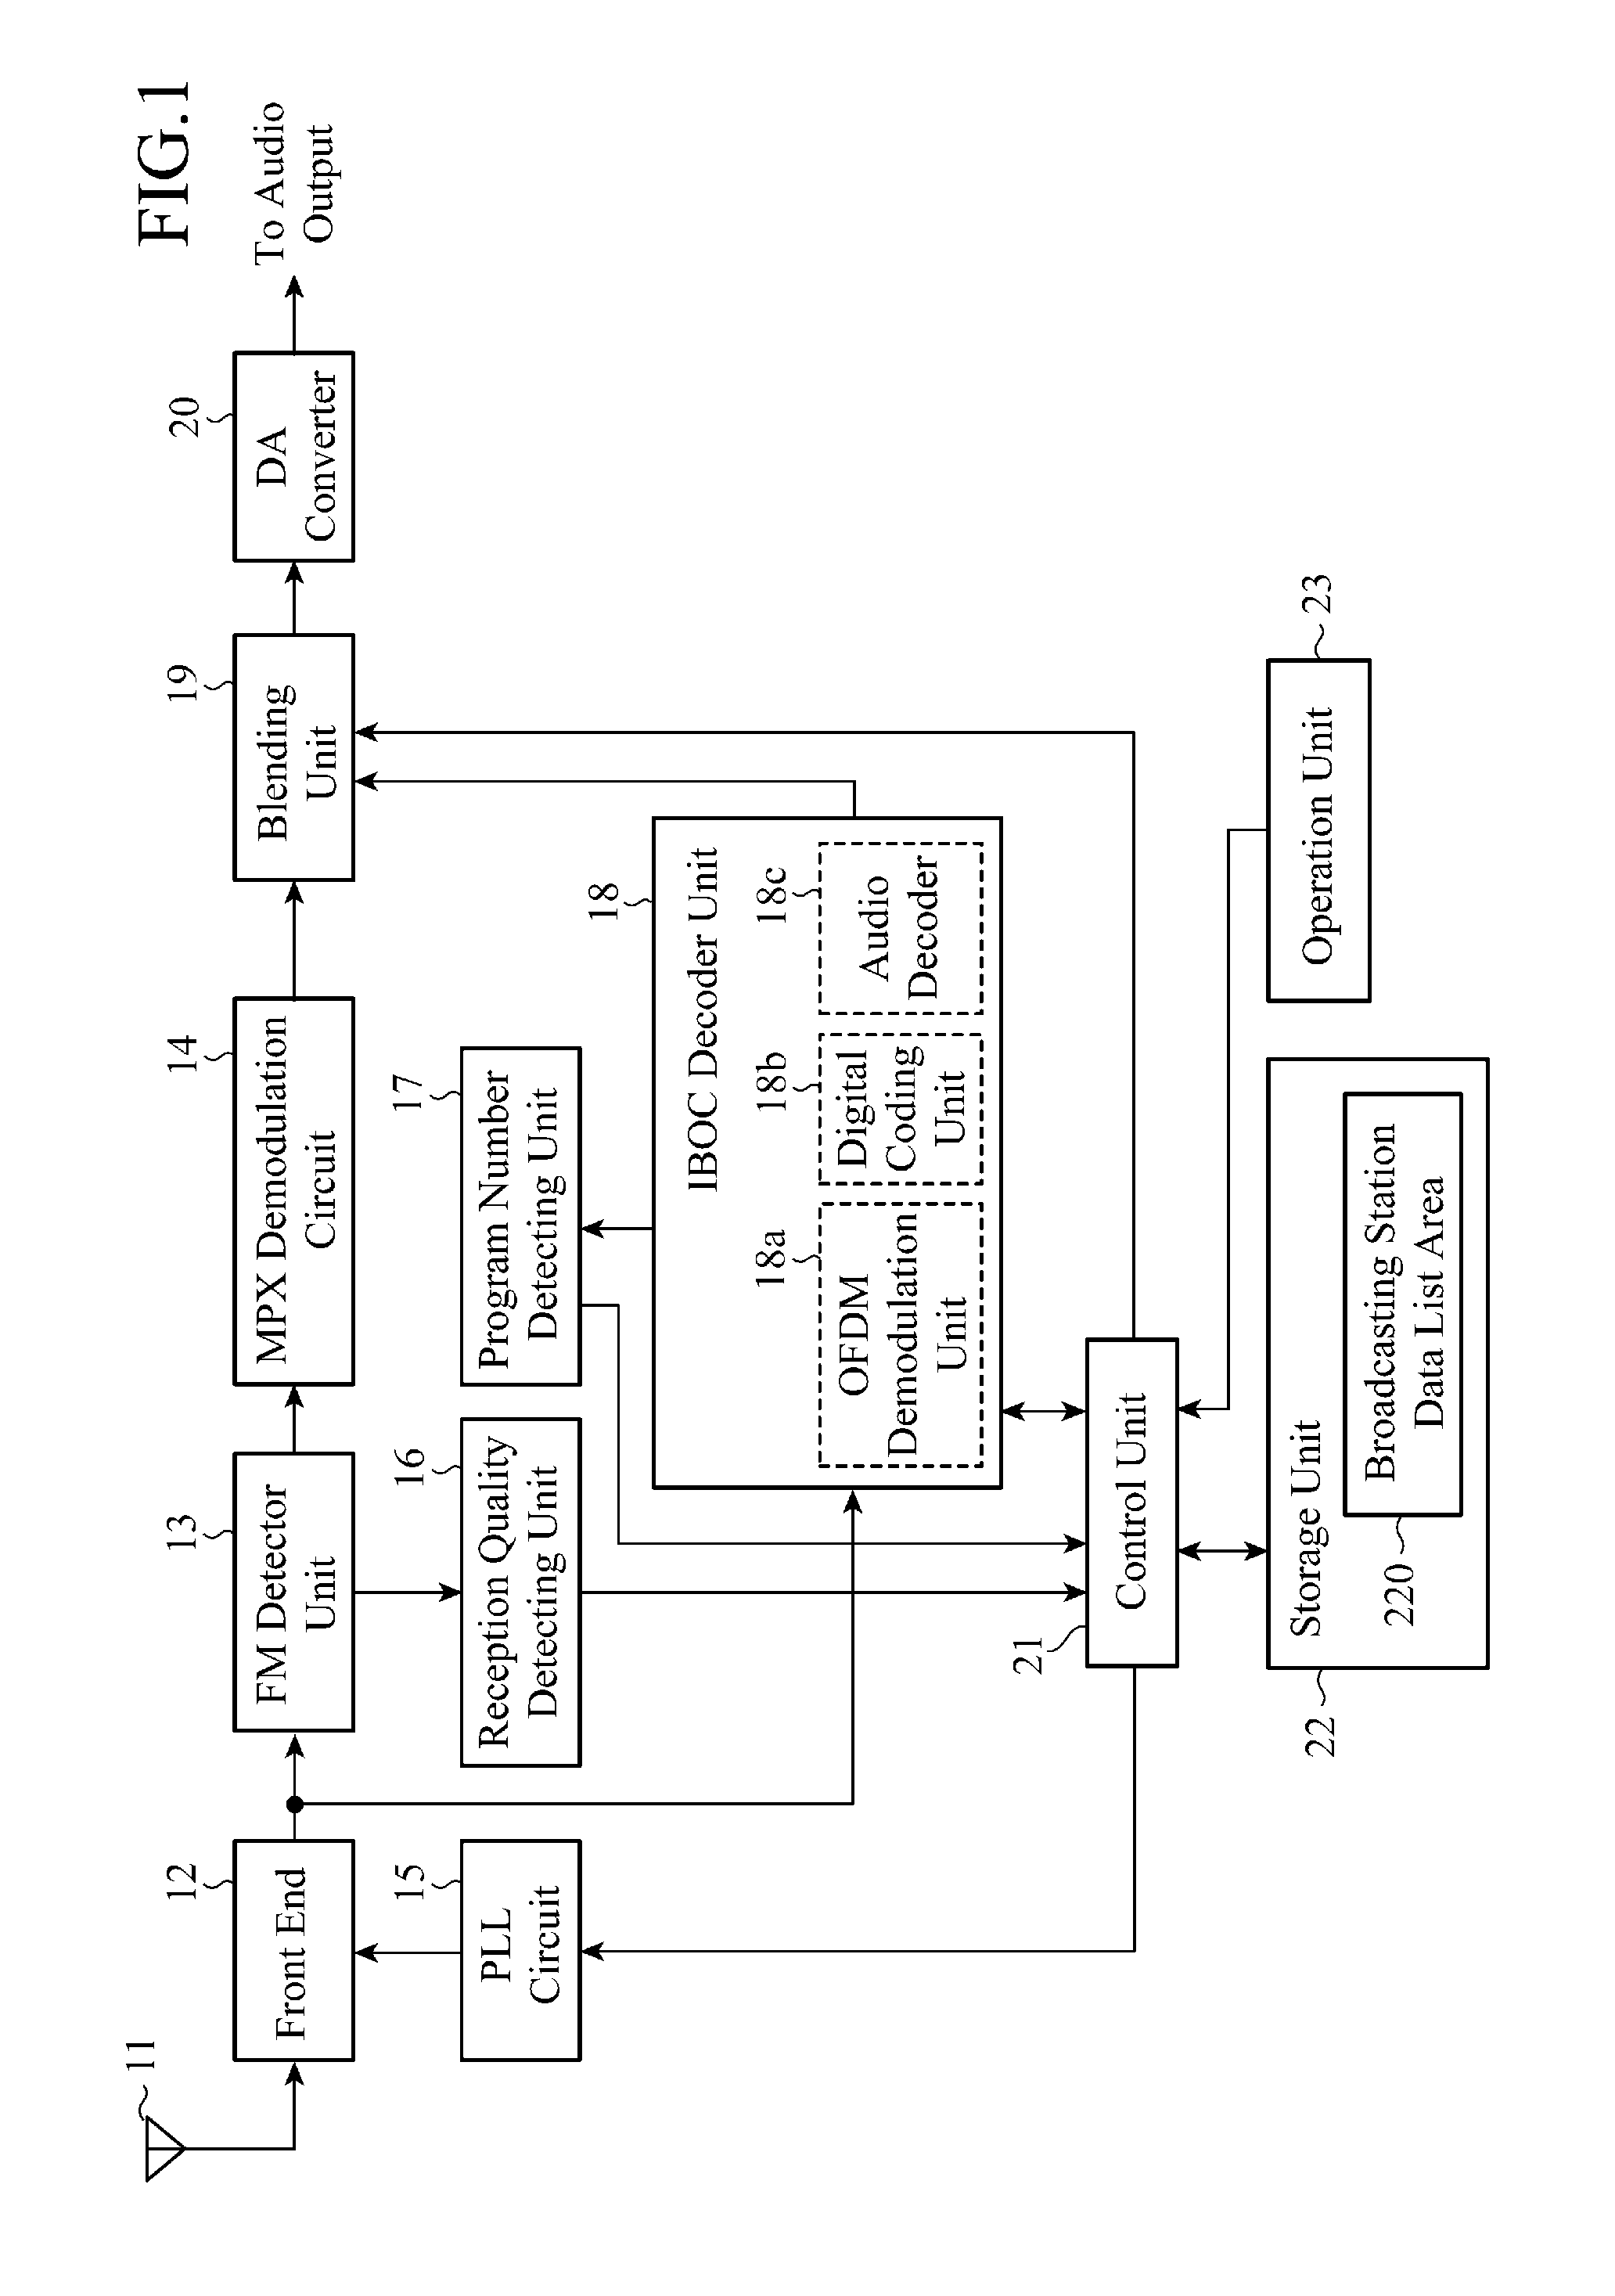 Hd radio receiver and autostore control method